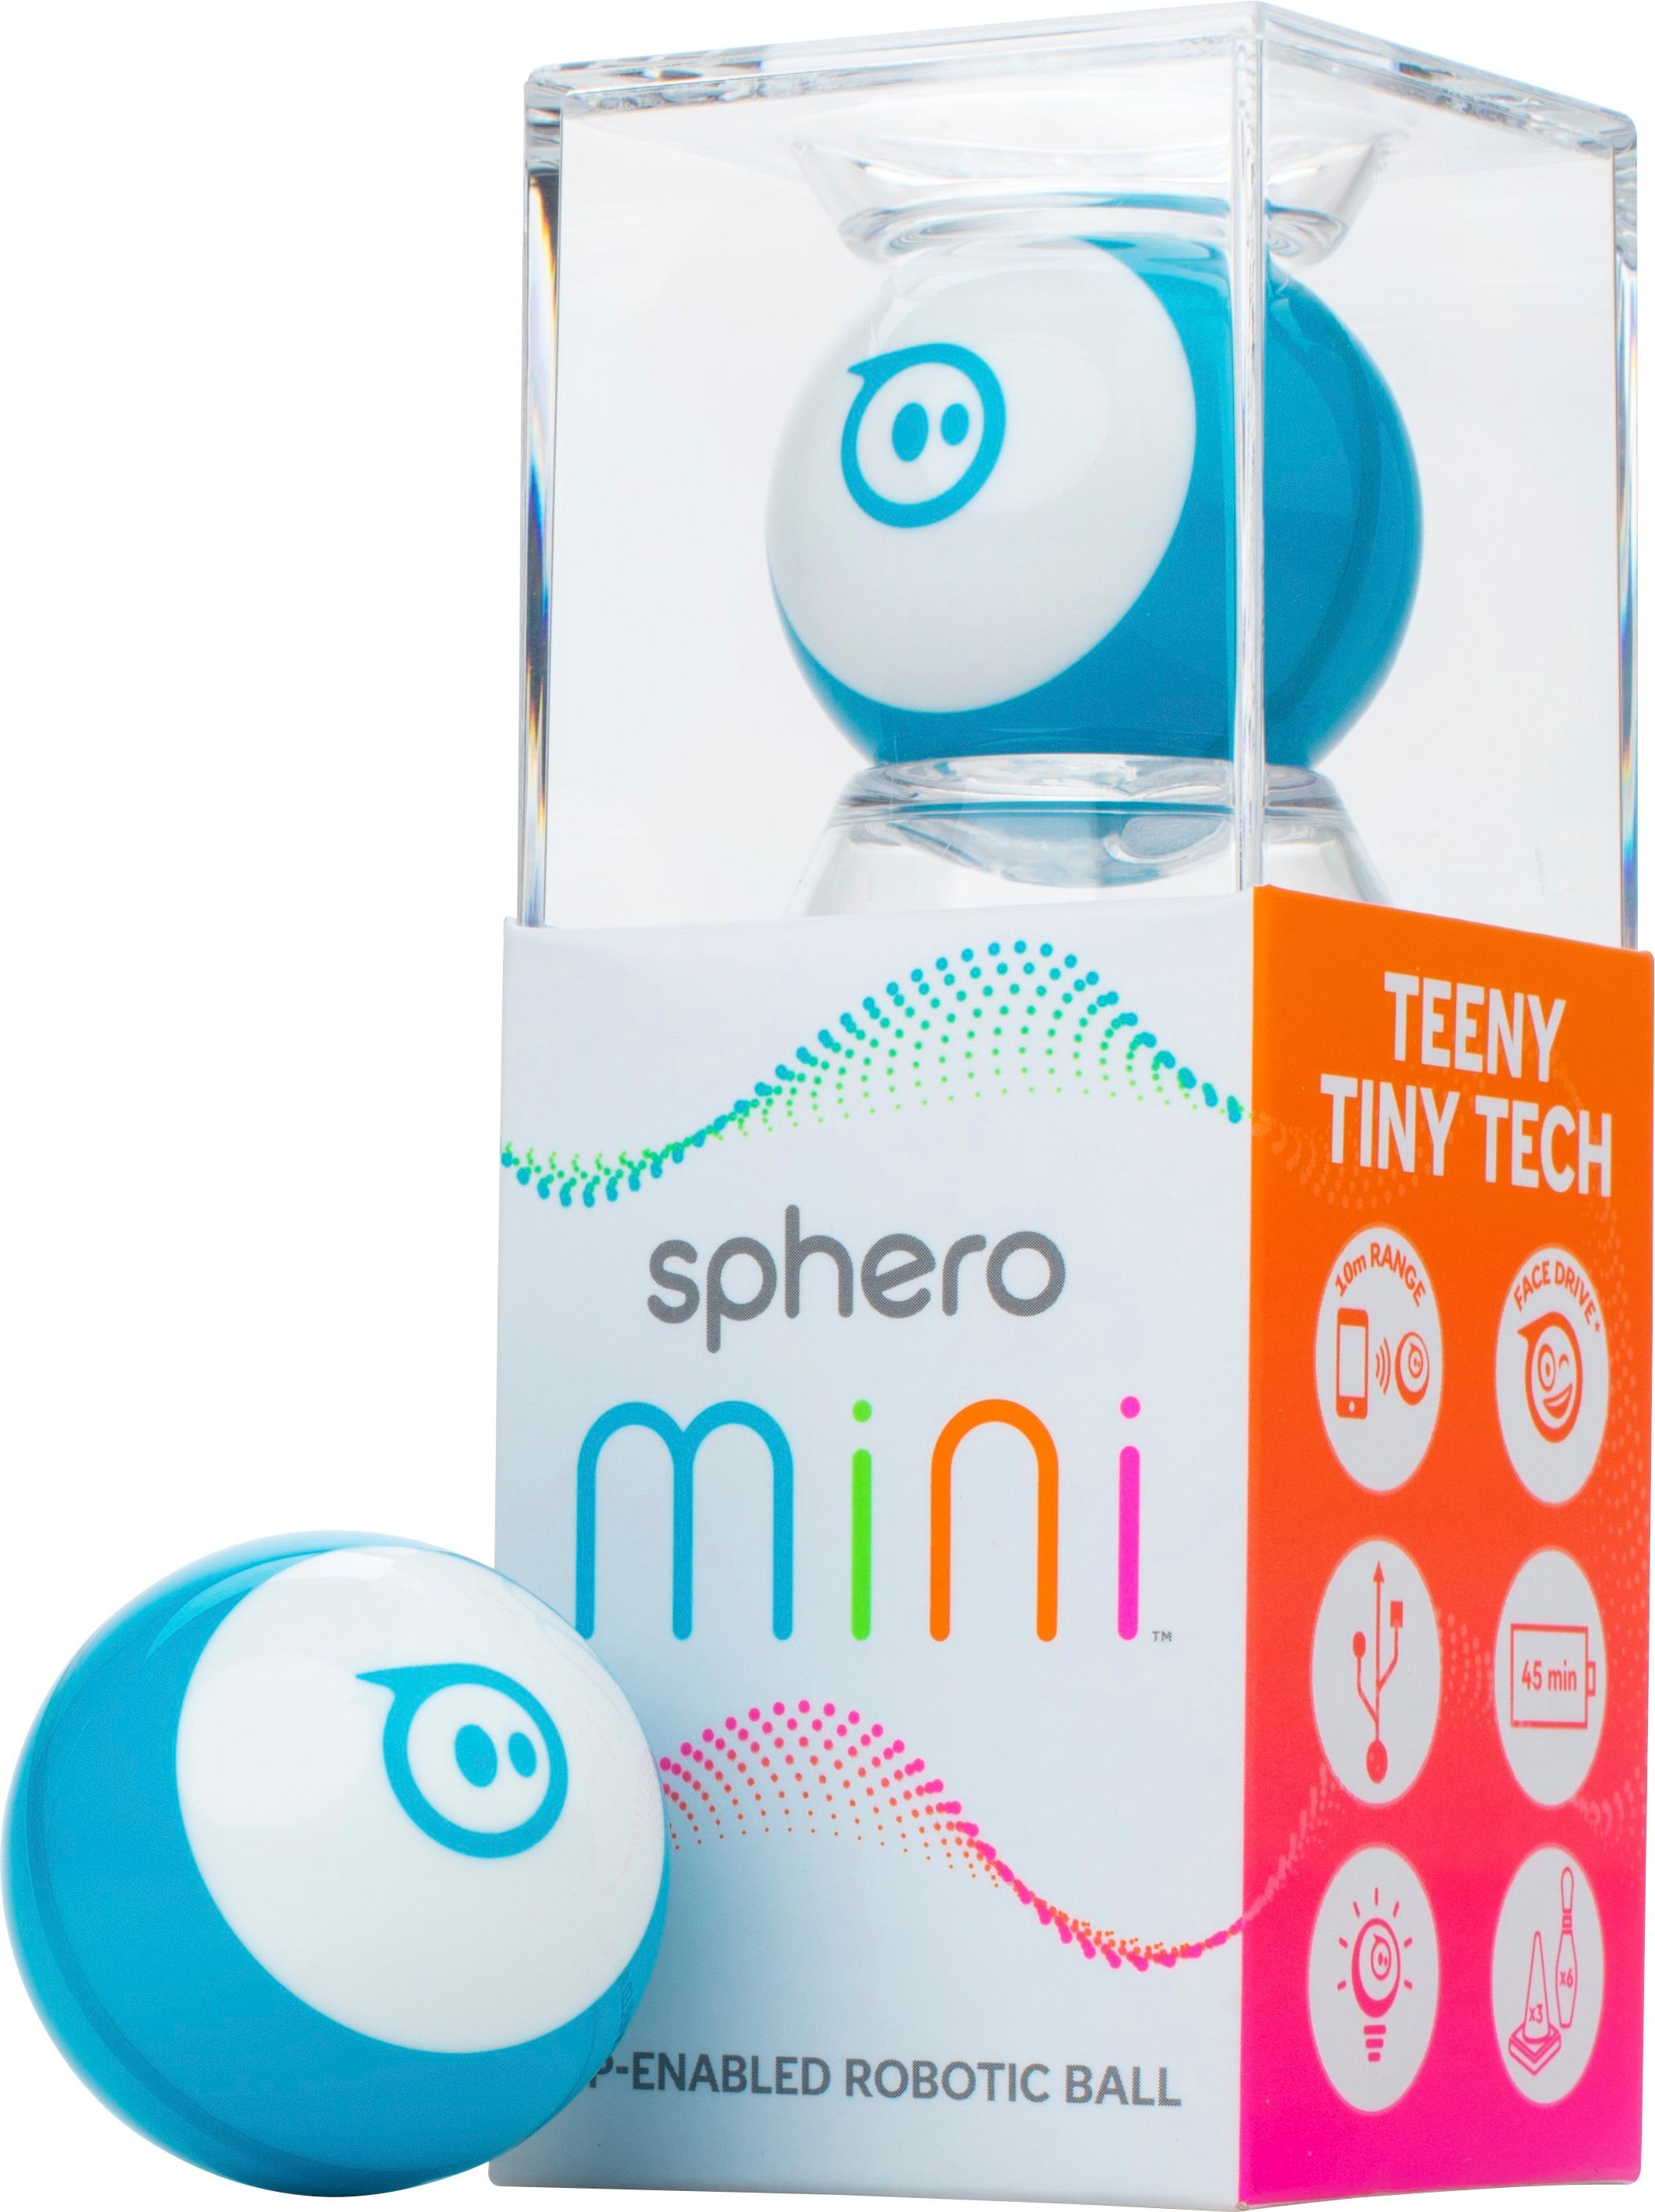 The App-Controlled Robot Ball Sphero Mini Green 